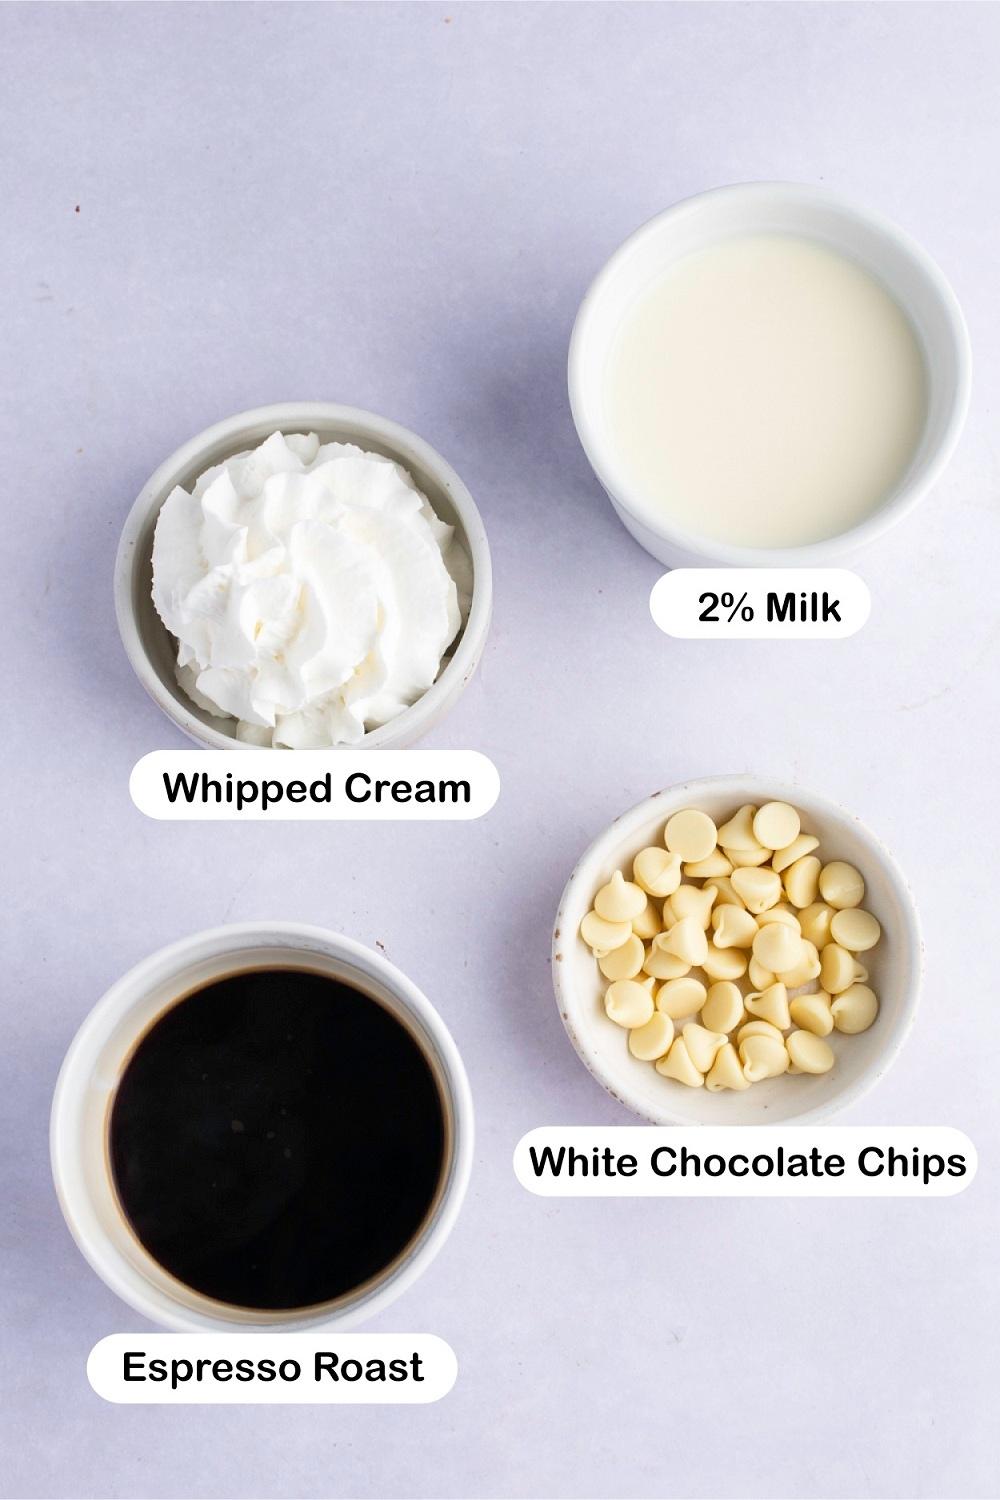 Starbucks White Chocolate Mocha Ingredients - White Chocolate Chips, Starbucks Espresso Roast, Milk and Whipped Cream